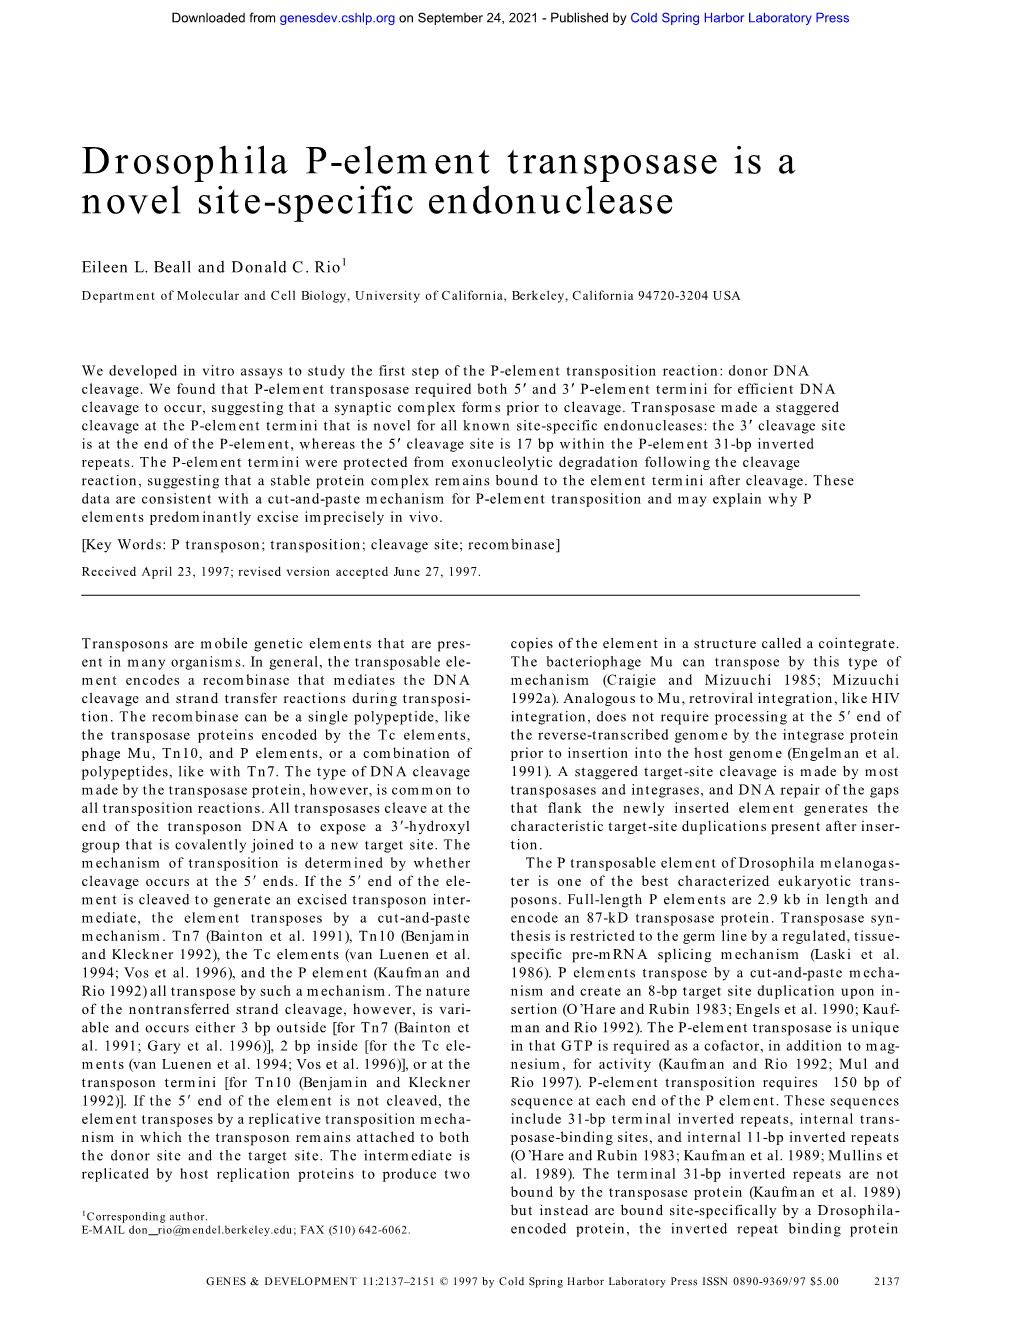 Drosophila P-Element Transposase Is a Novel Site-Specific Endonuclease